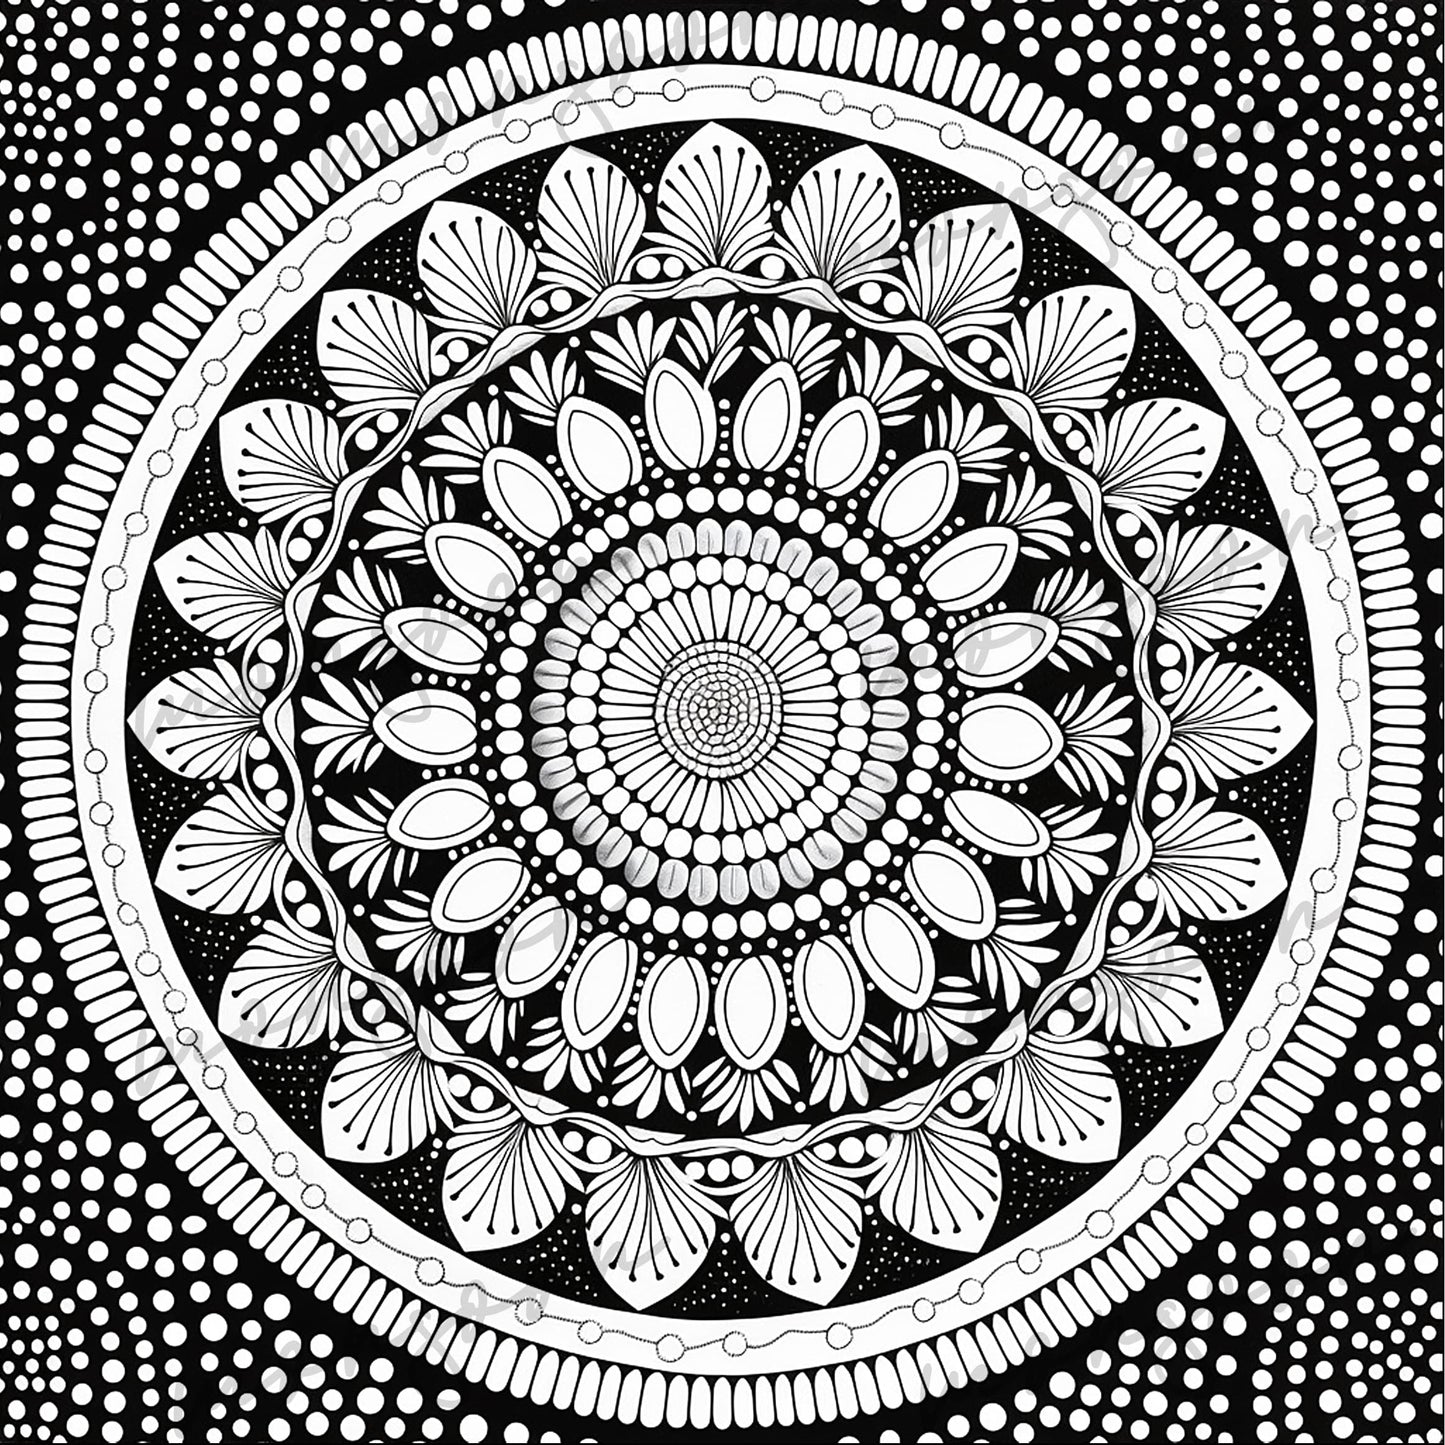 Dot Painting Mandalas Coloring Book (Digital)